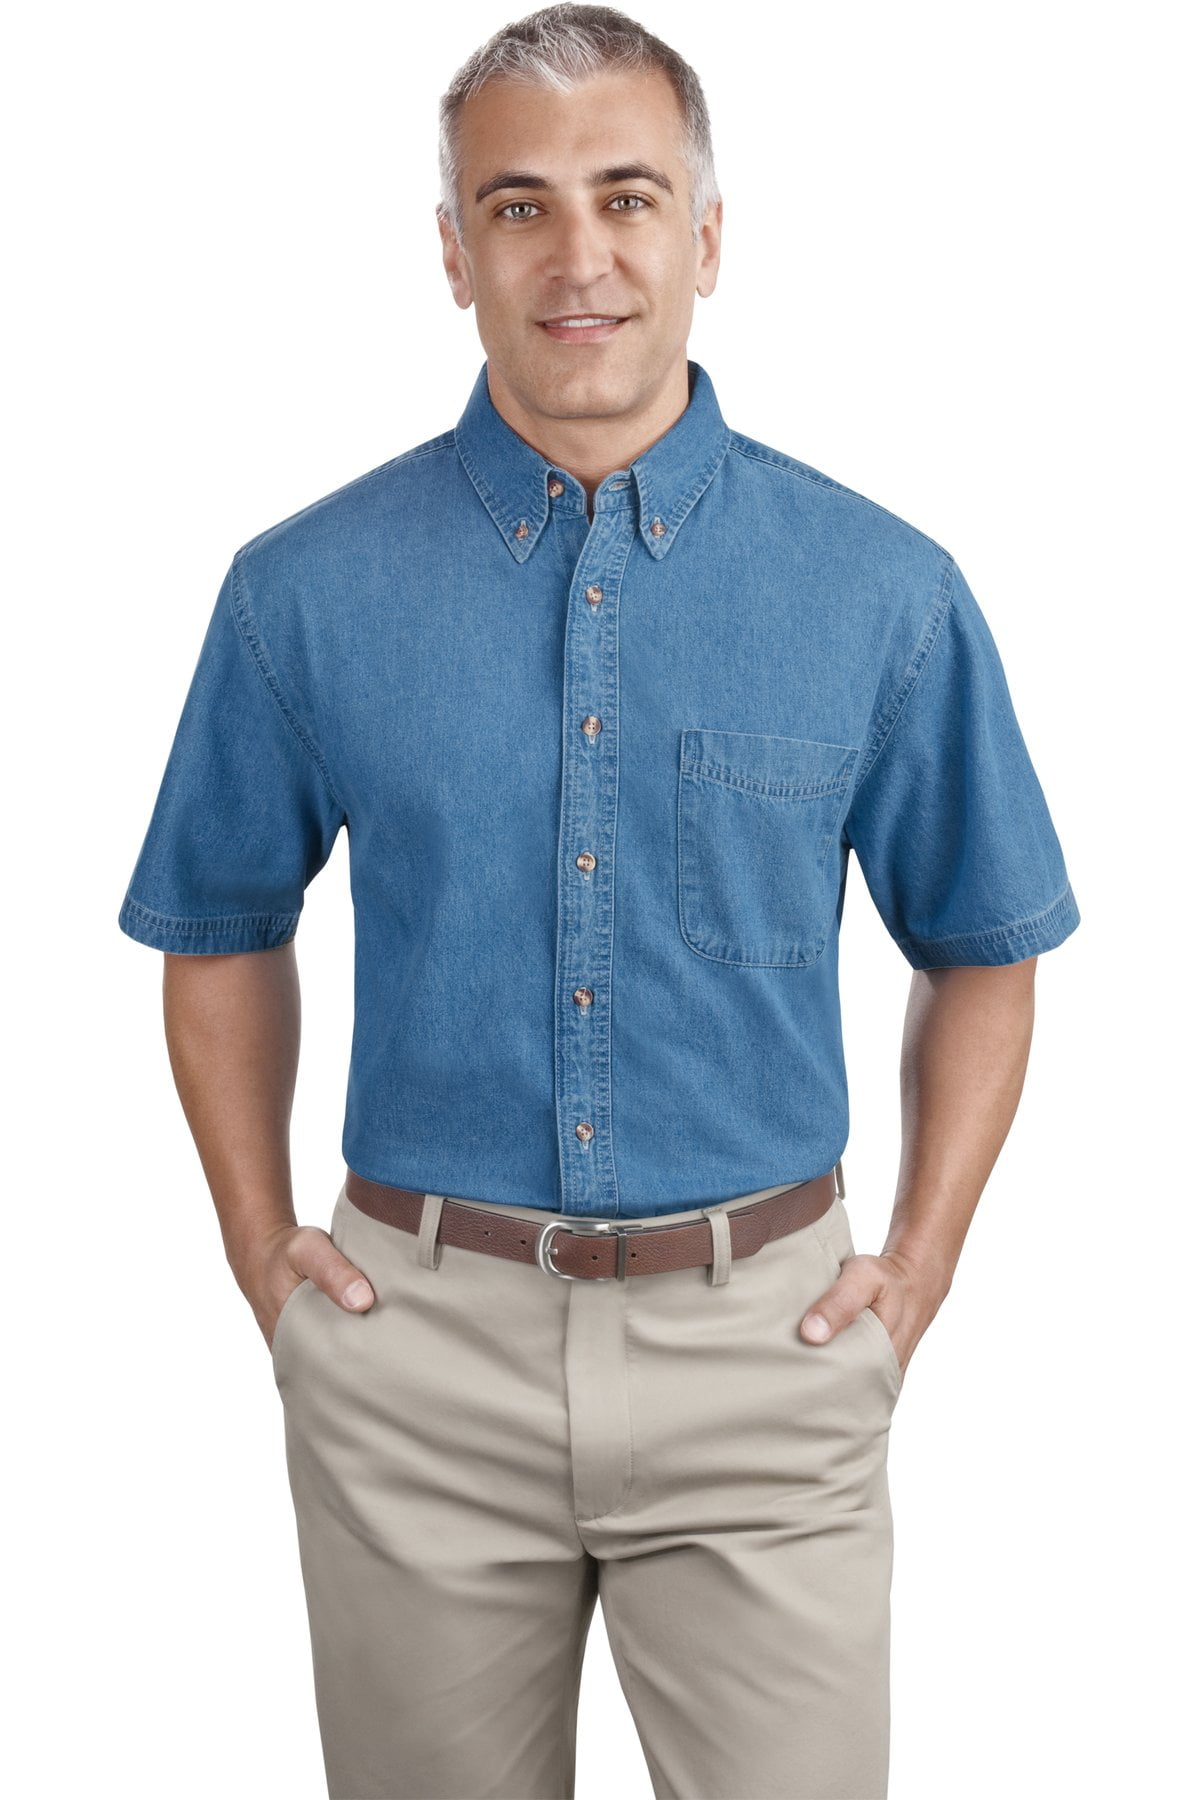 Port & Company - Short Sleeve Value Denim Shirt - Walmart.com